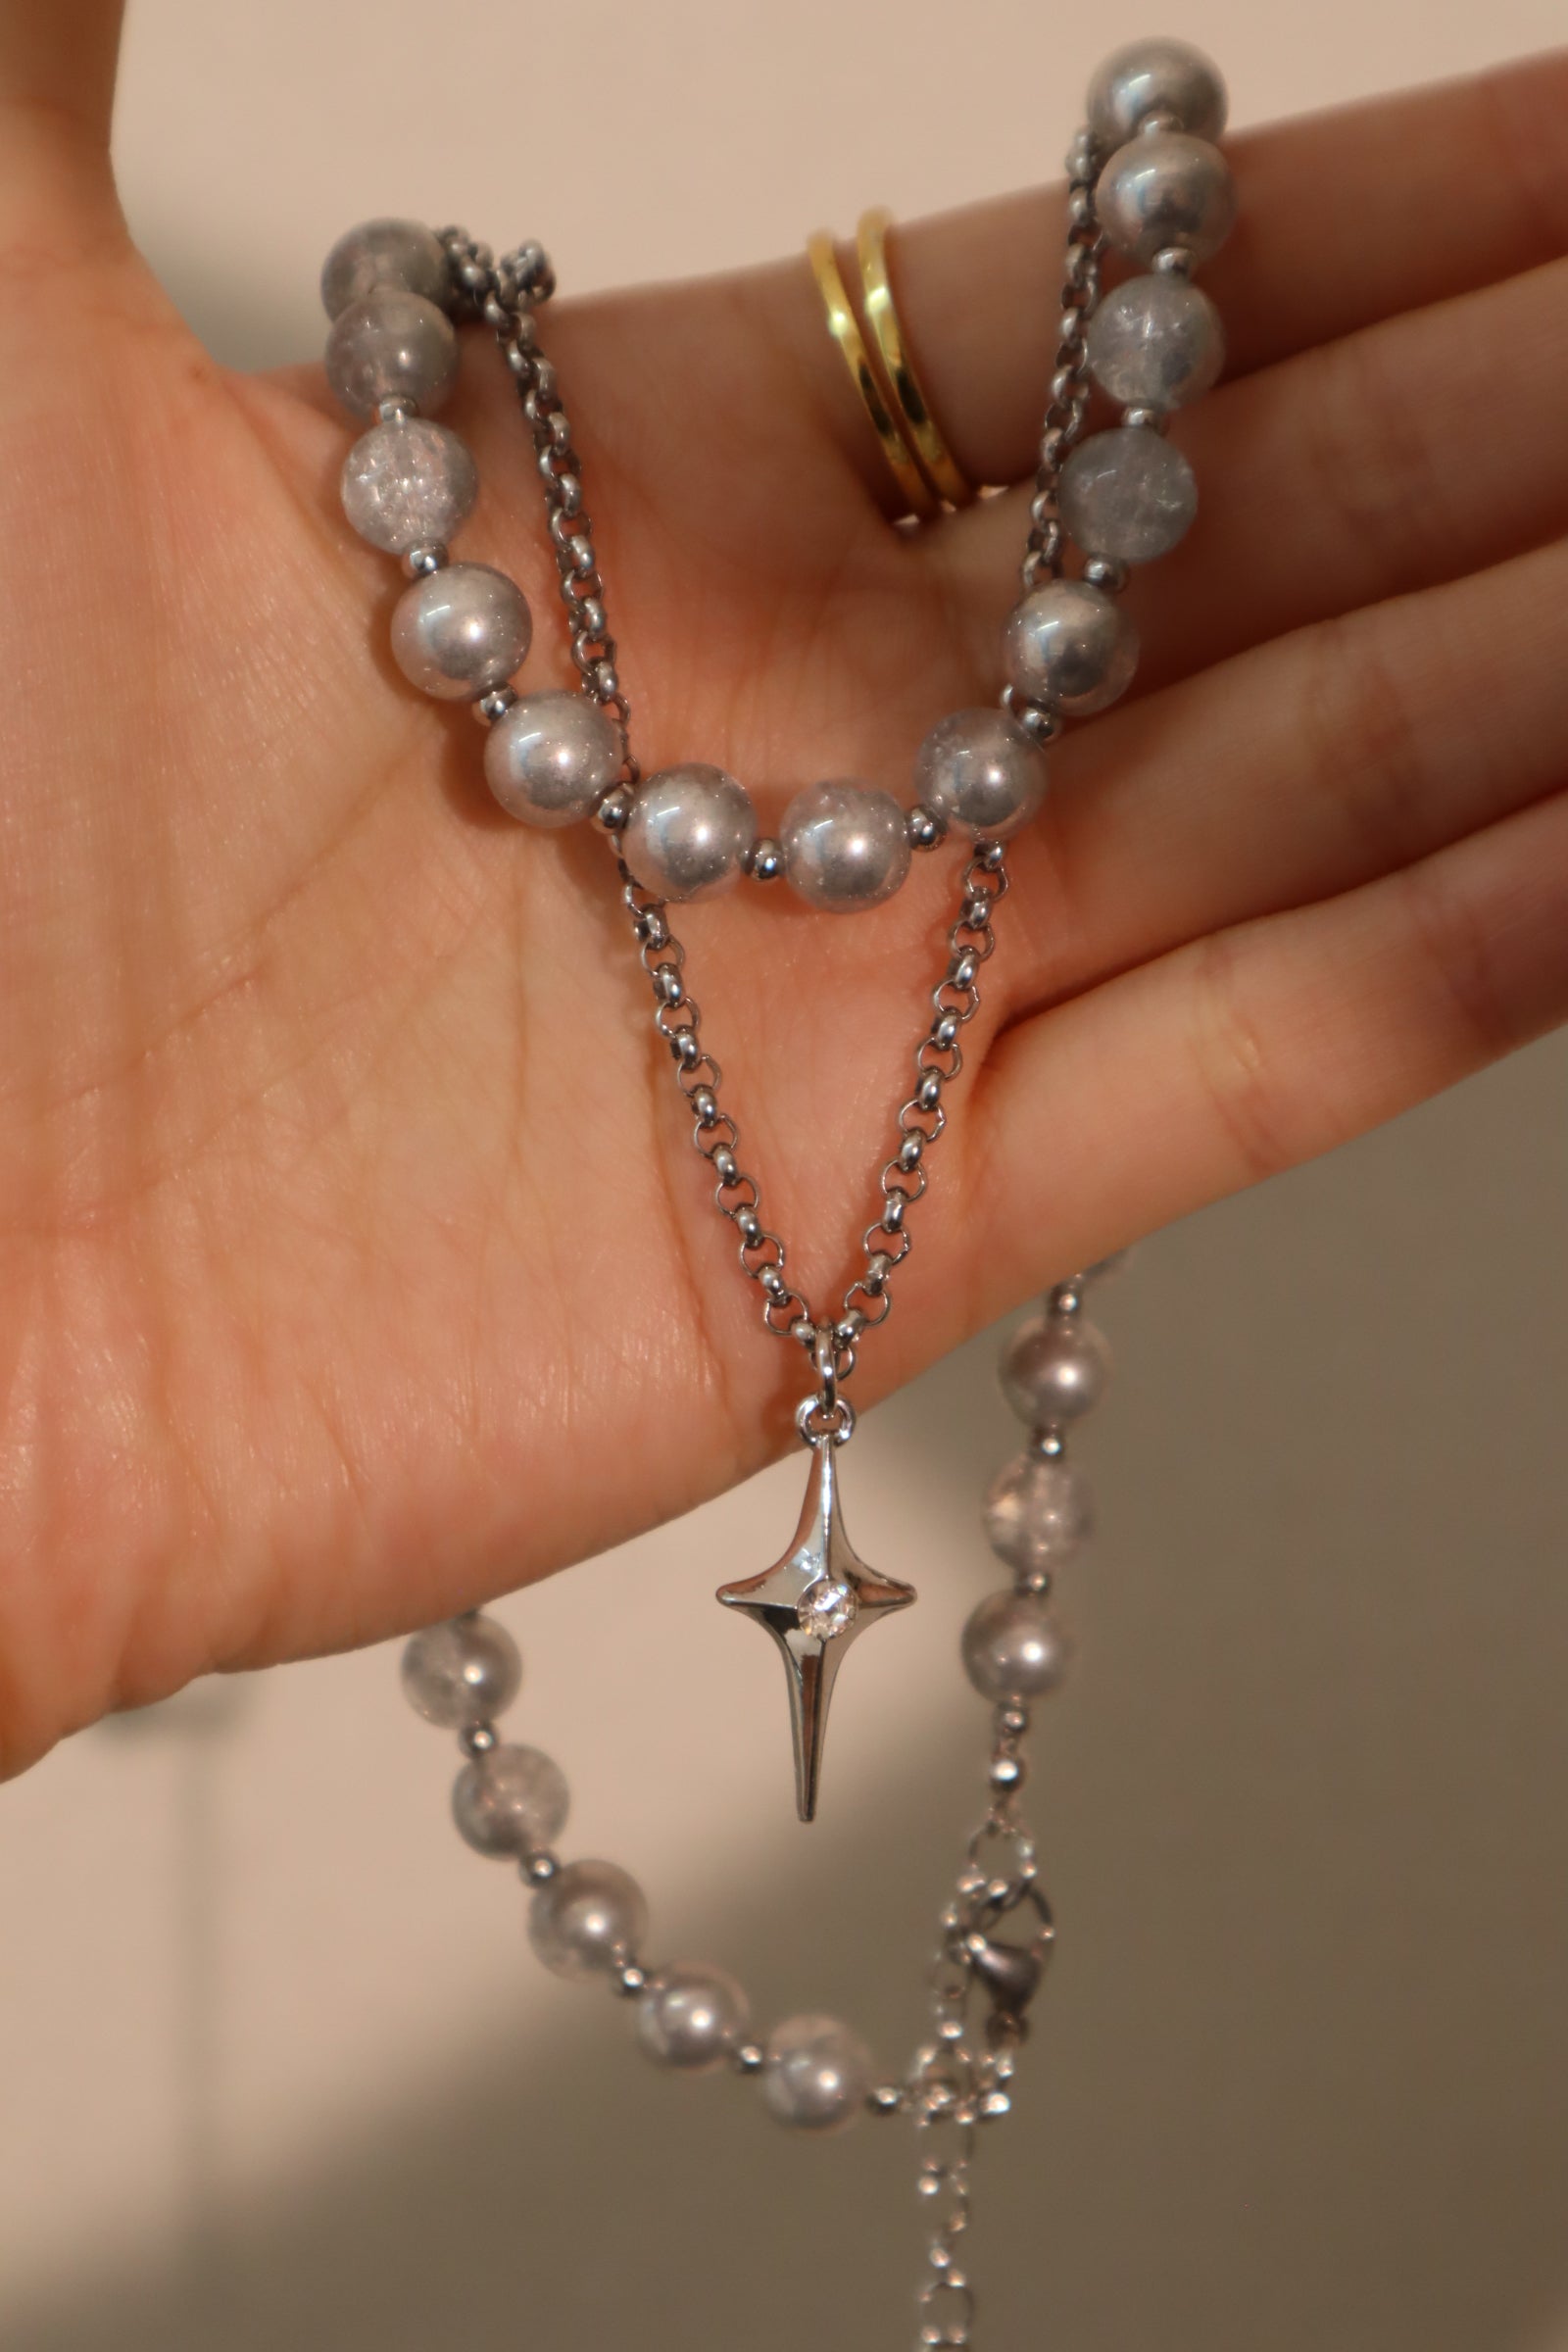 Moonlight Star Beads Necklace